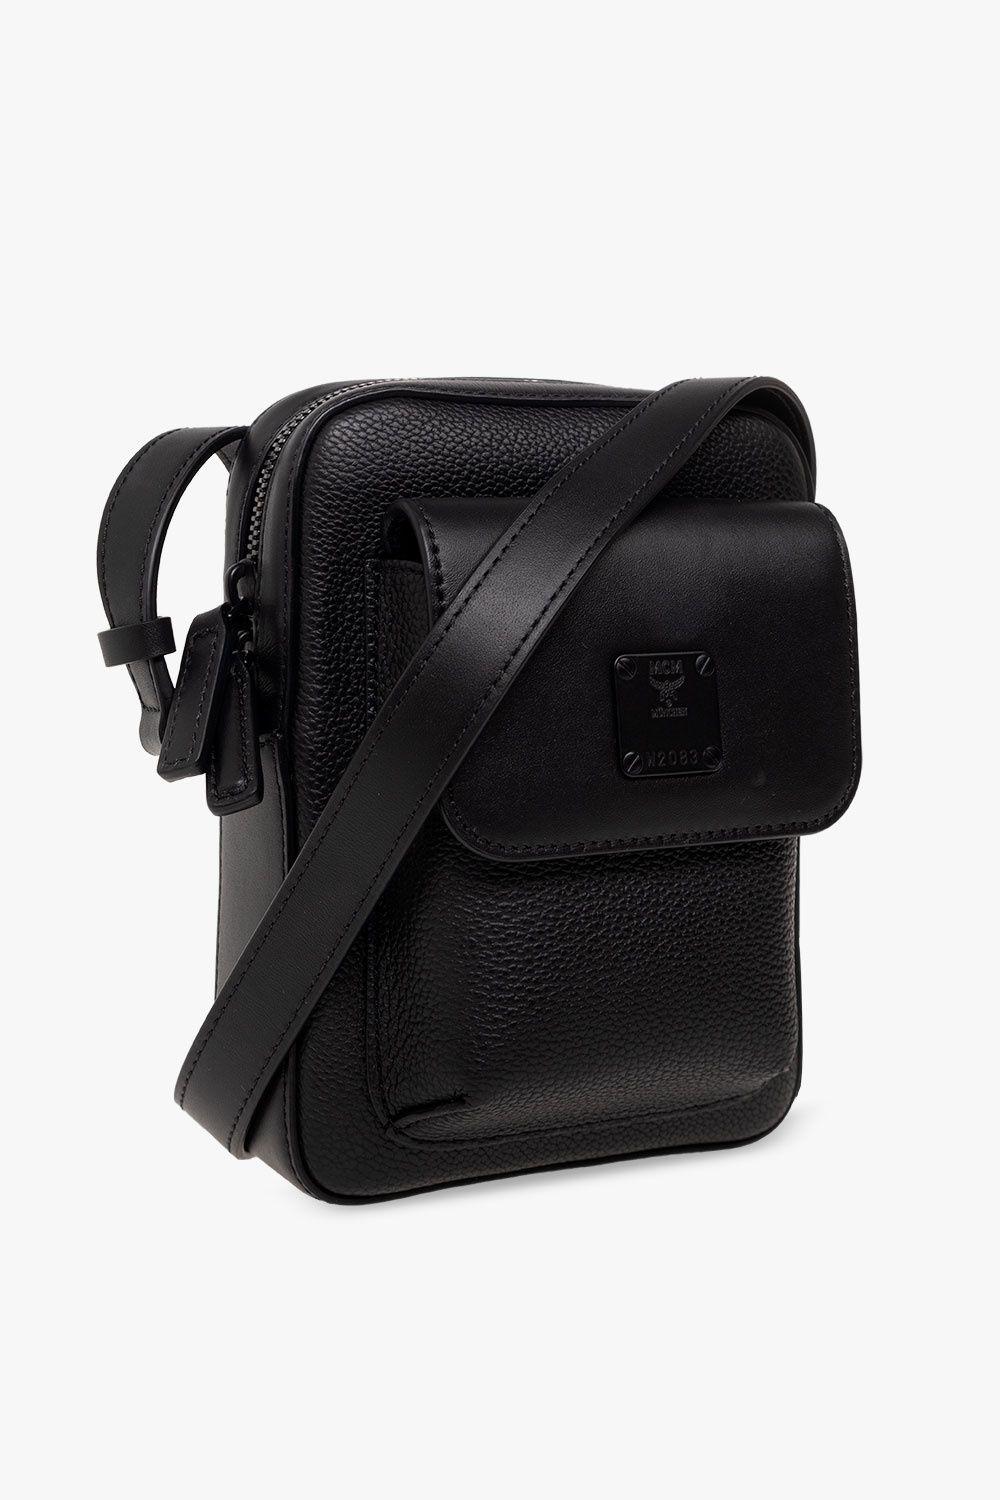 MCM Black Shoulder Bag  Black shoulder bag, Bags, Shoulder bag